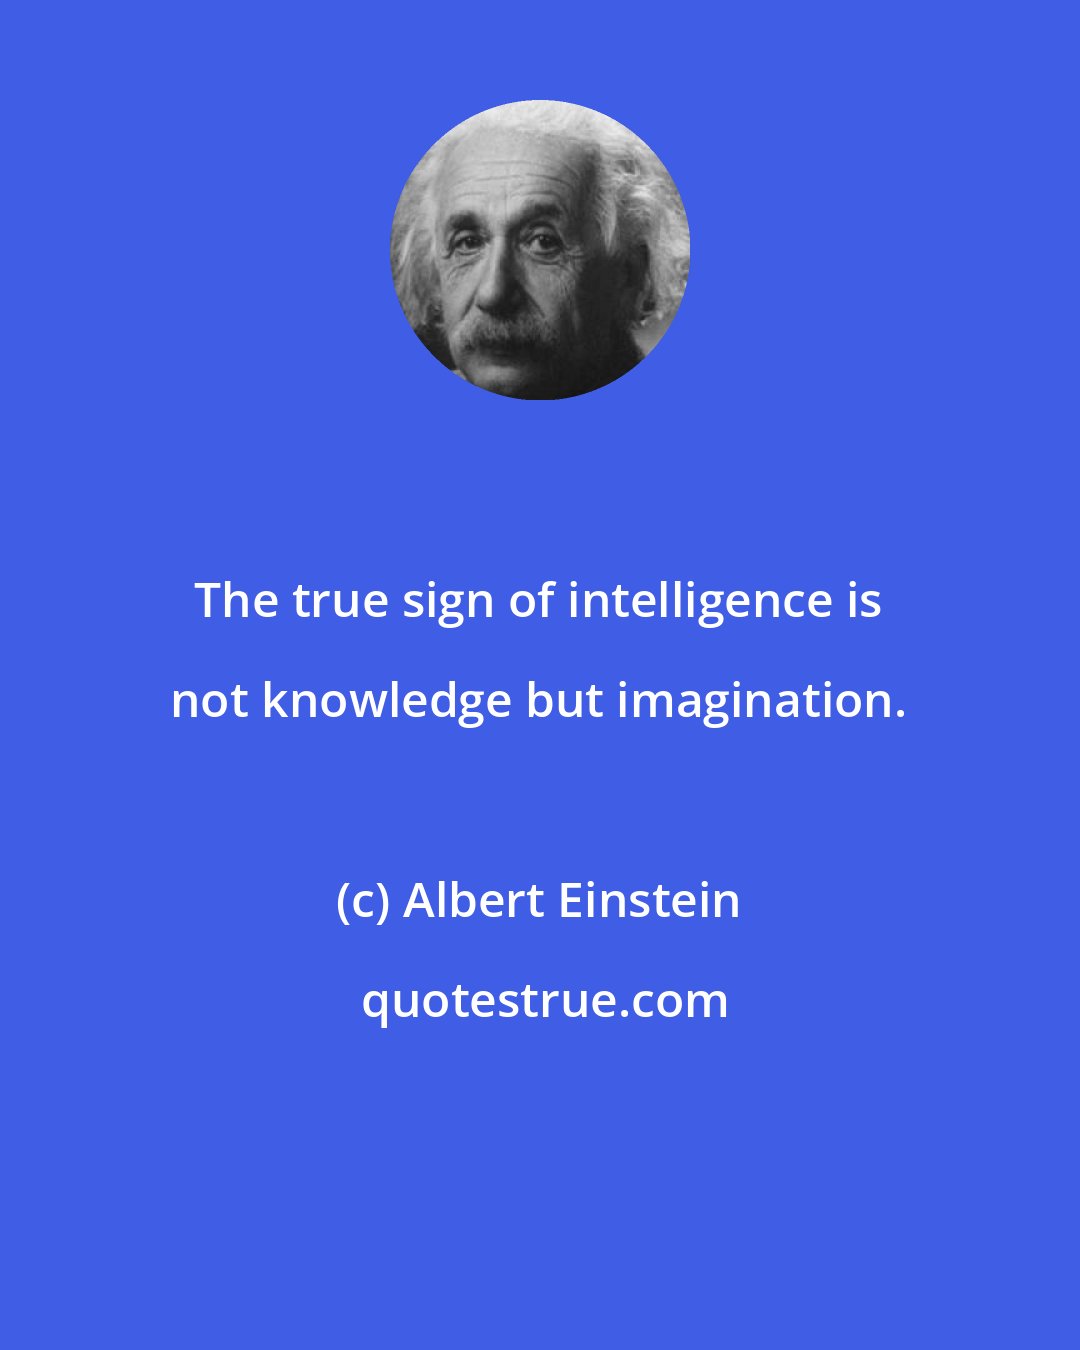 Albert Einstein: The true sign of intelligence is not knowledge but imagination.